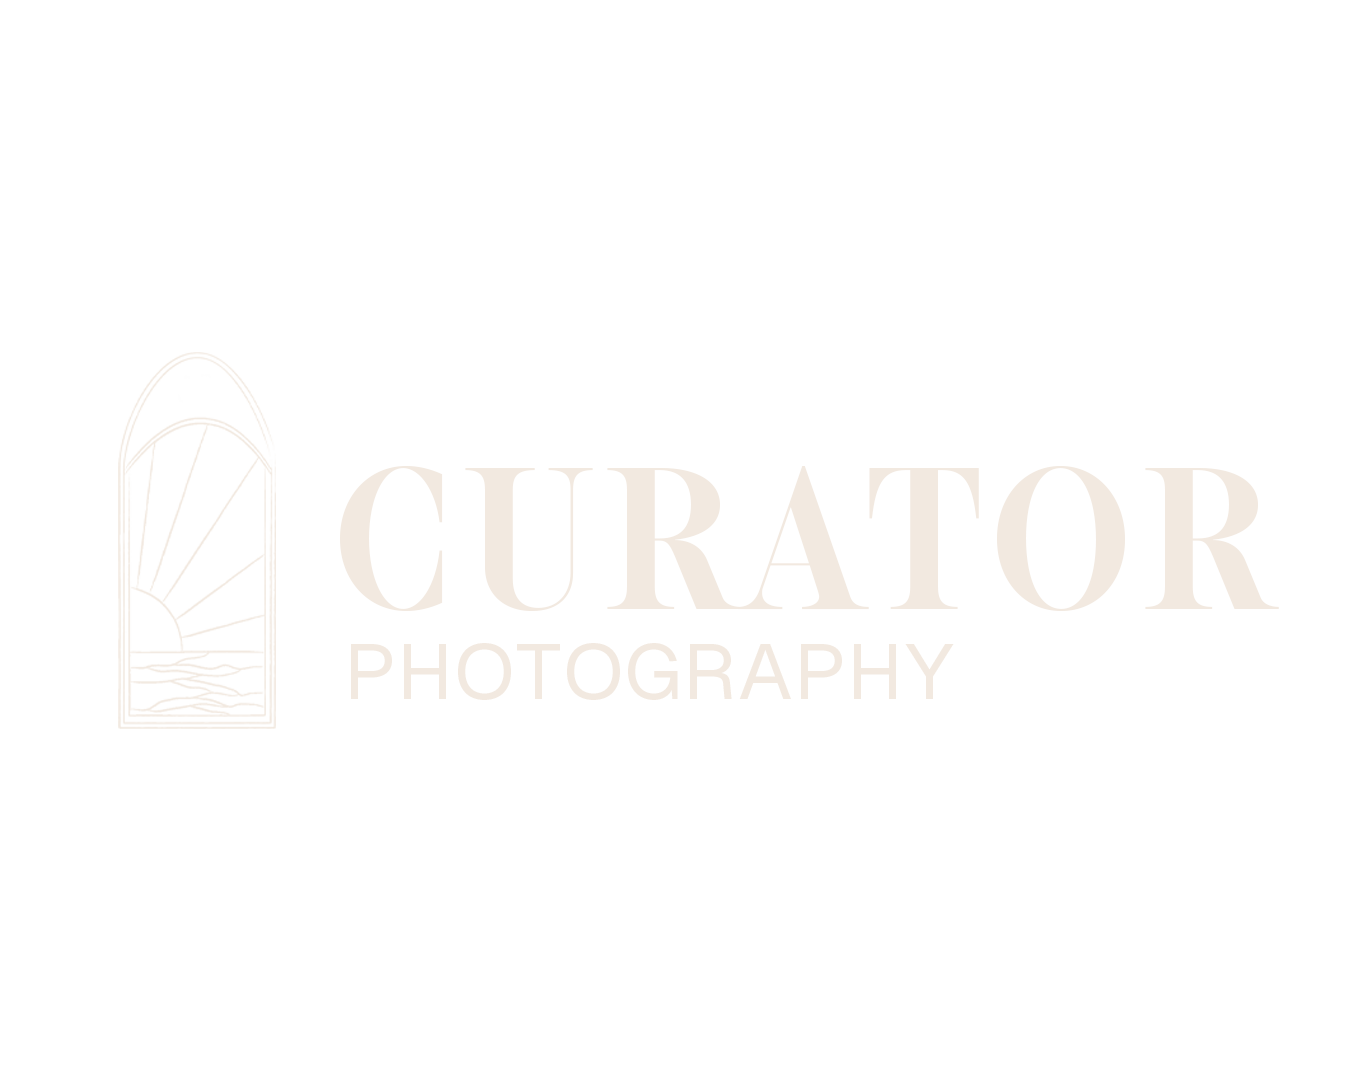 Curator Photography